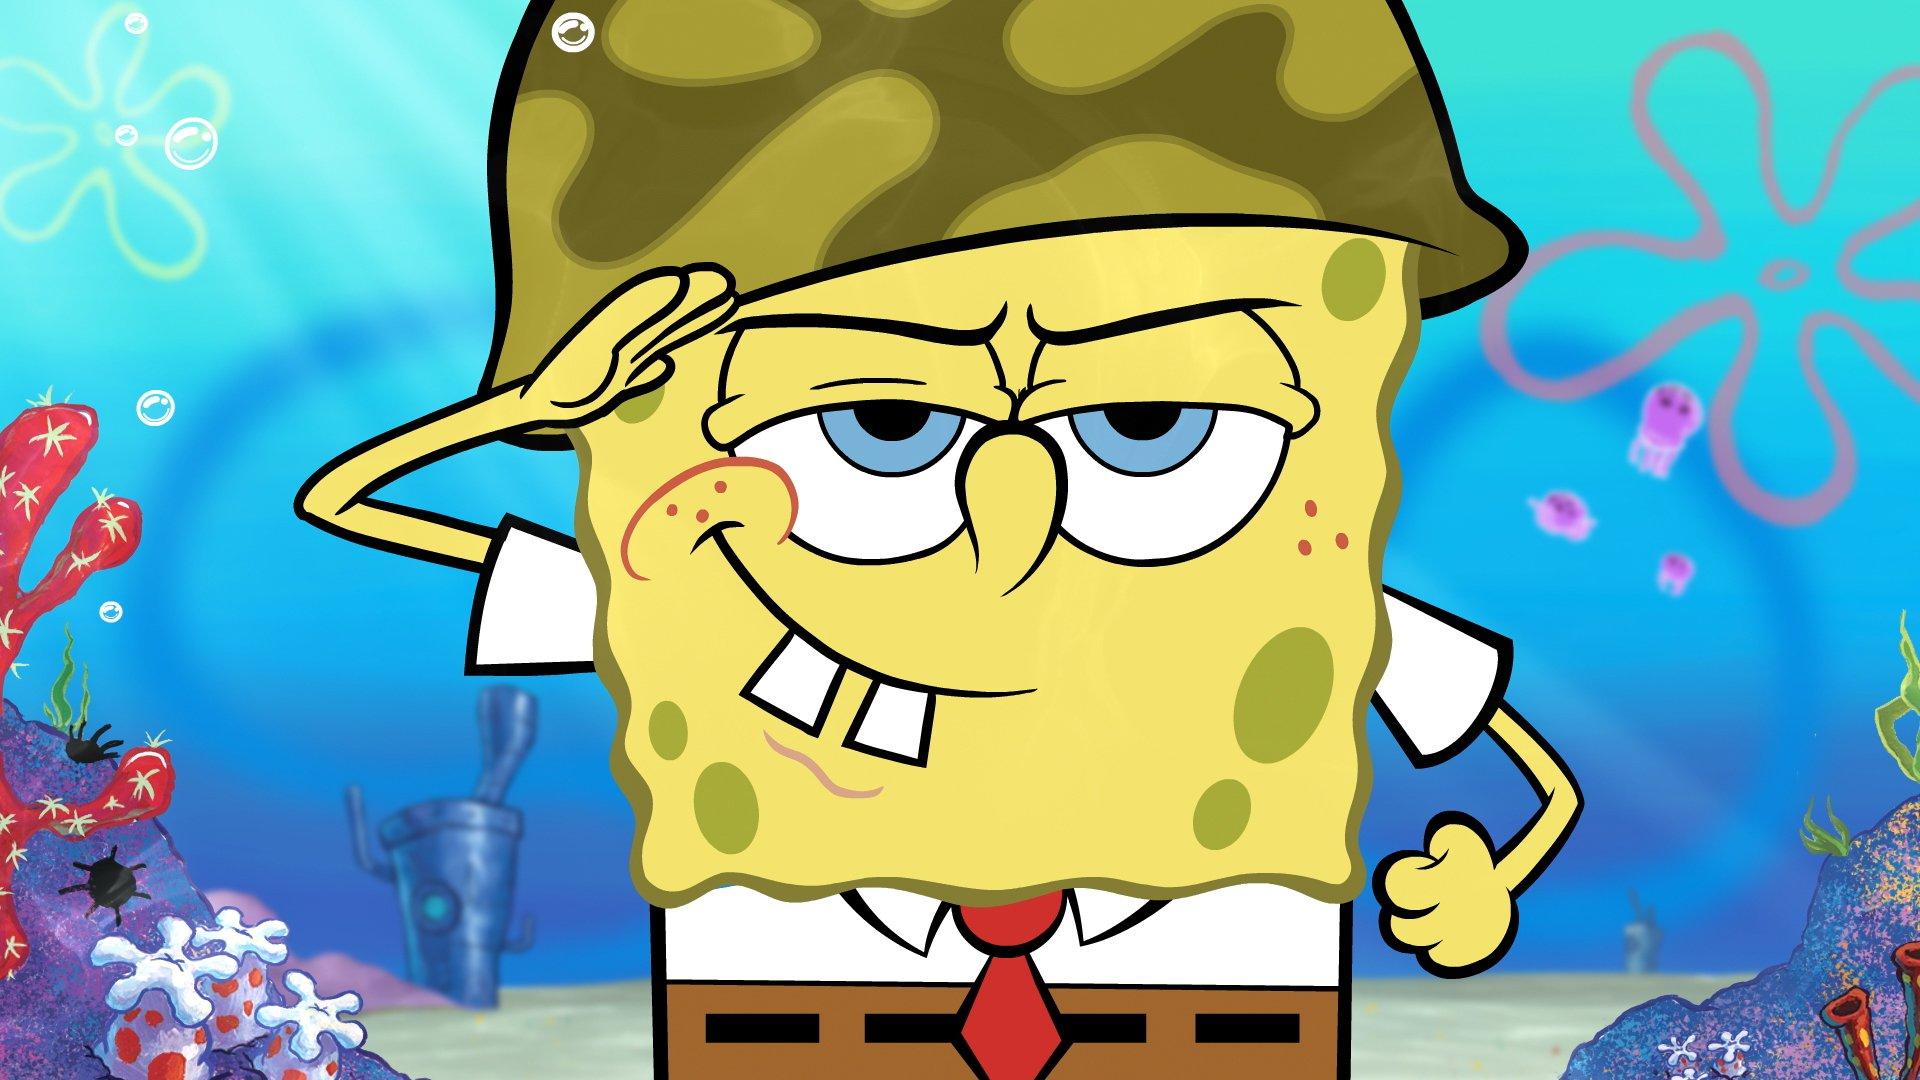 SpongeBob SquarePants: Battle for Bikini Bottom - Rehydrated - Nintendo Switch